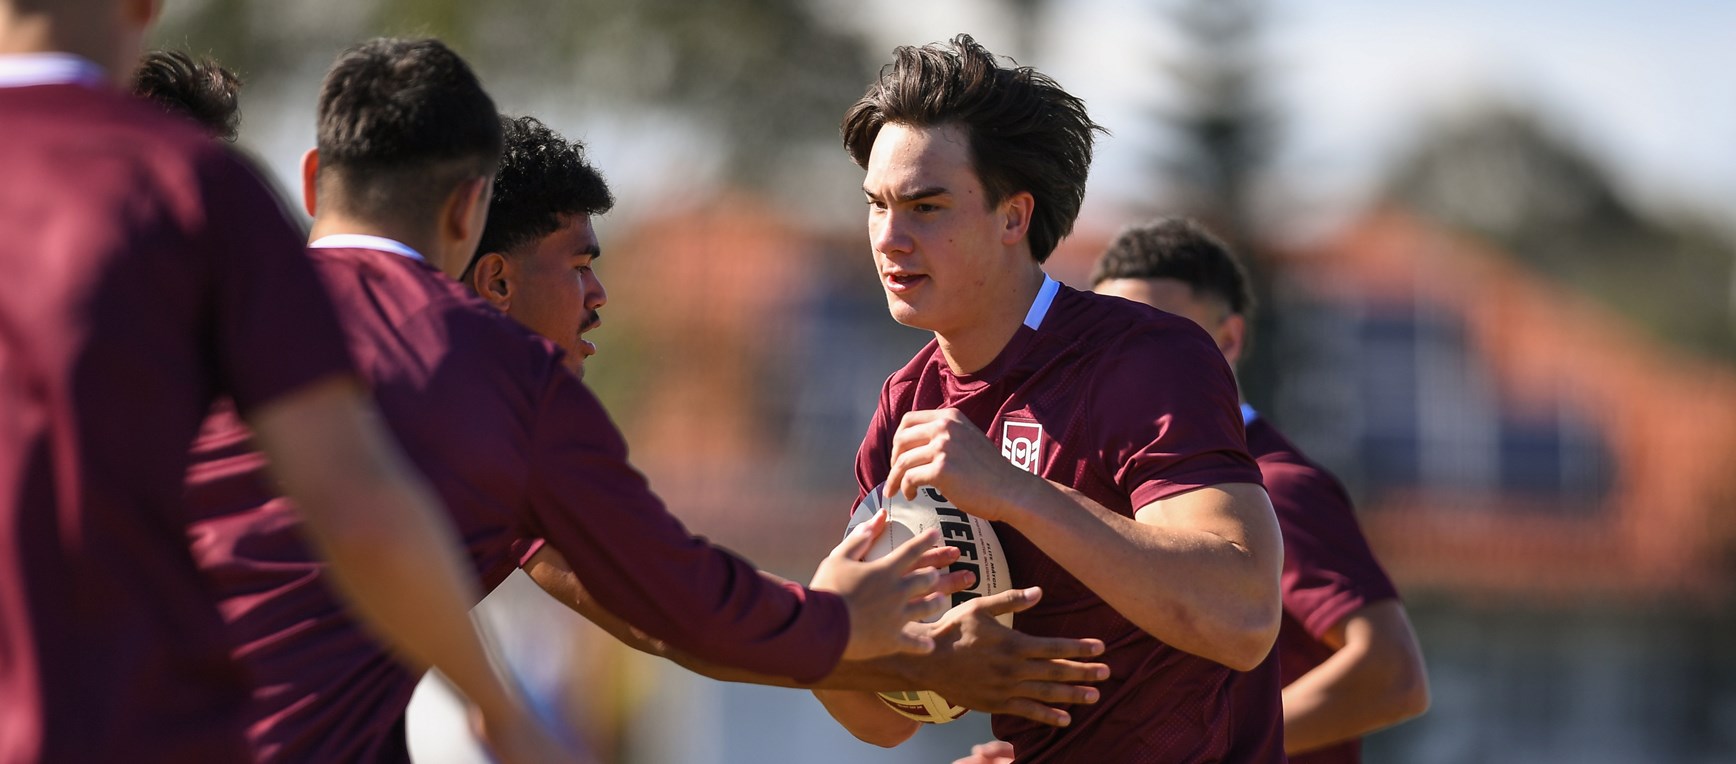 In pictures: Queensland Under 19 side get stuck into training